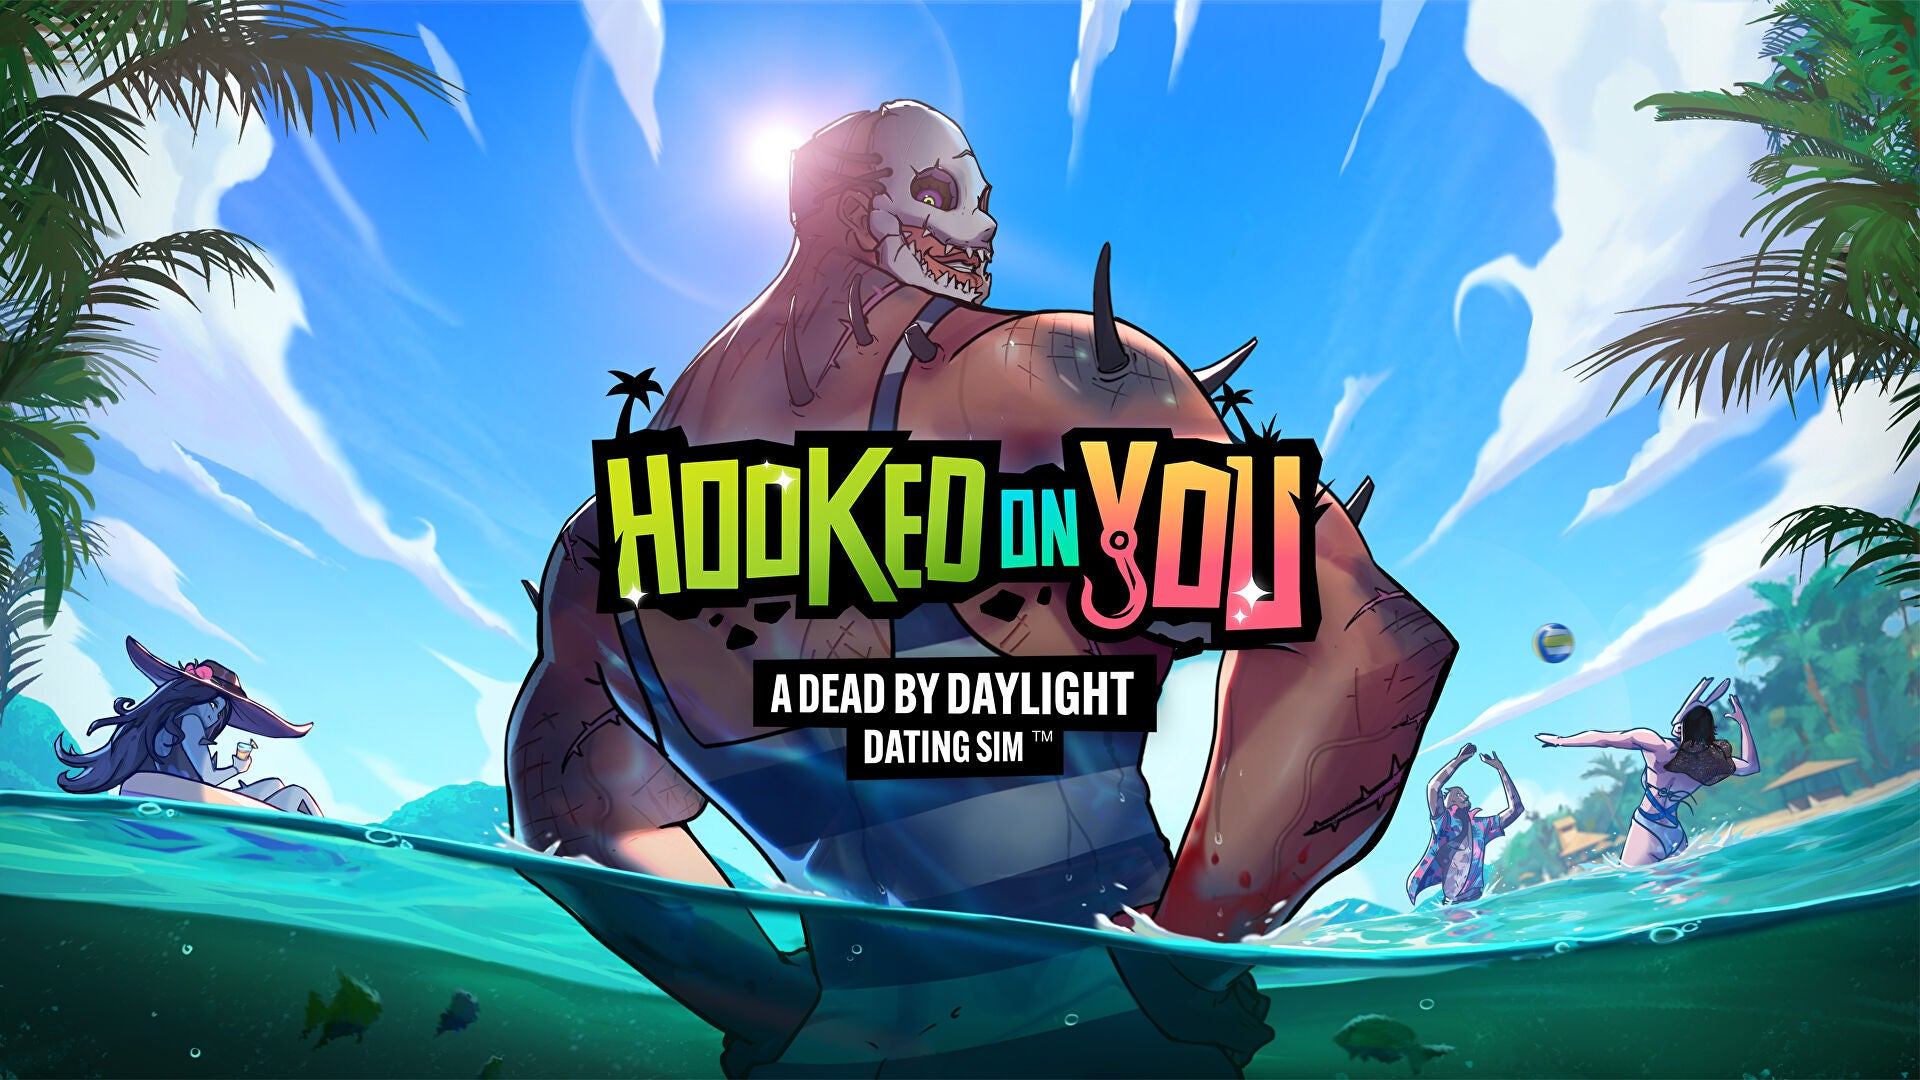 Immagine di Dead by Daylight ha il suo dating sim Hooked on You. Sì, avete capito bene